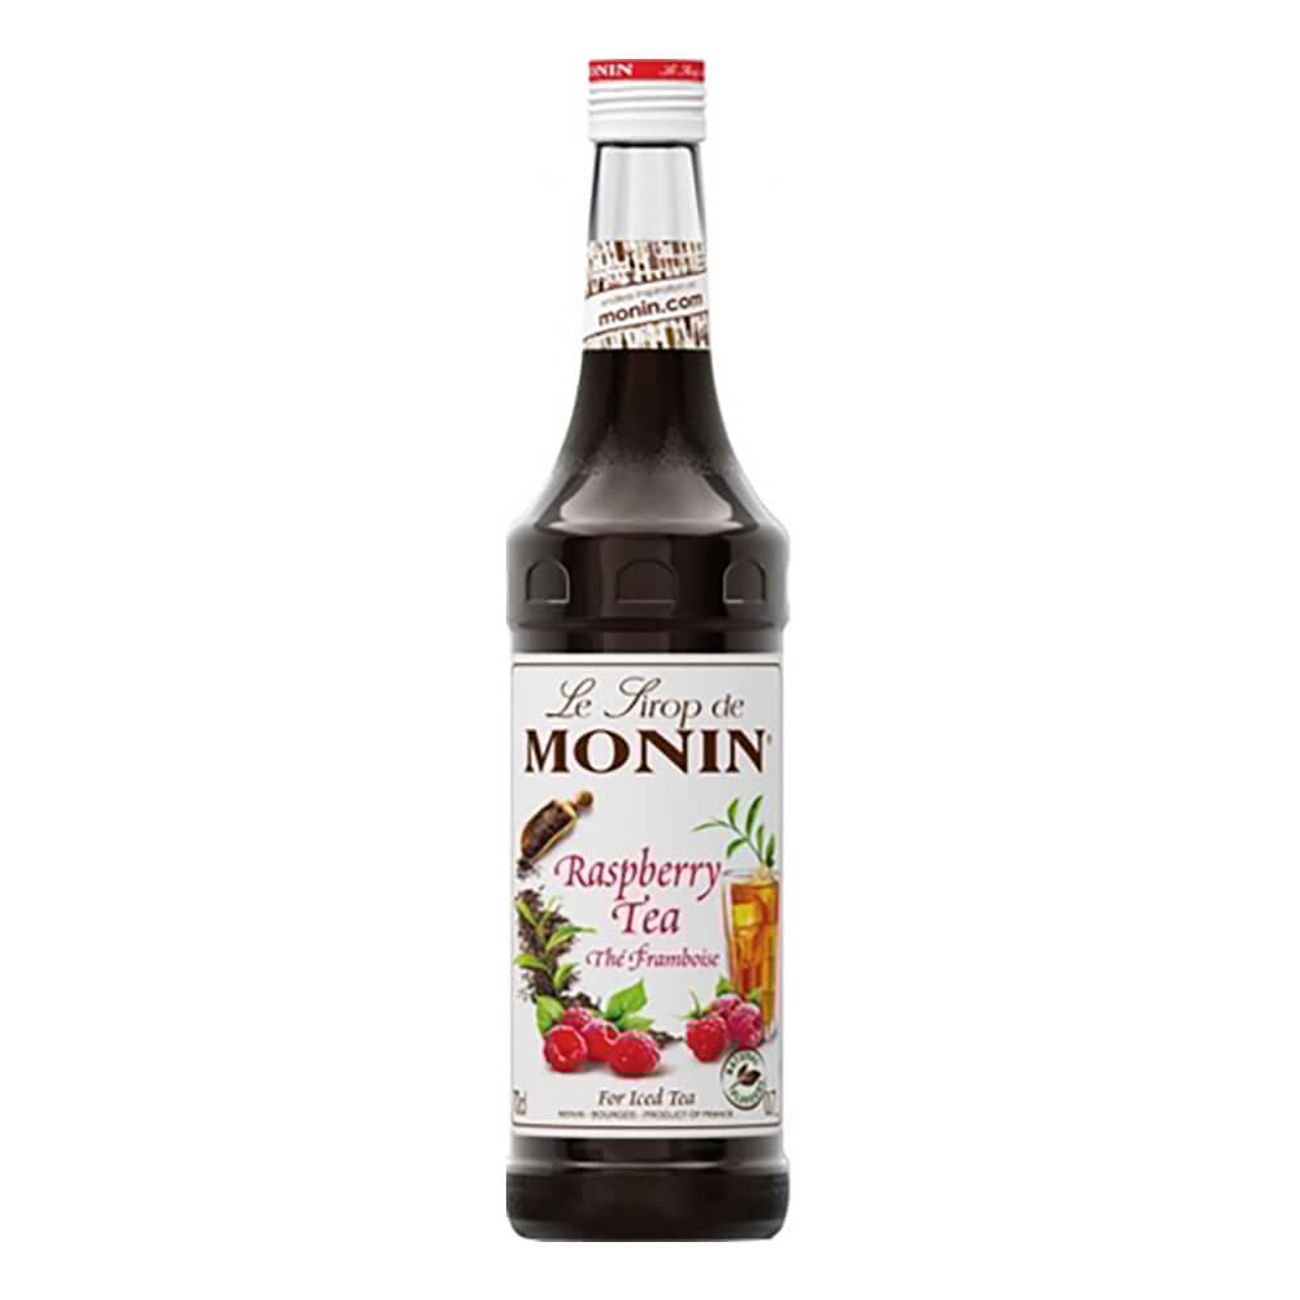 monin-hallonte-syrup-10